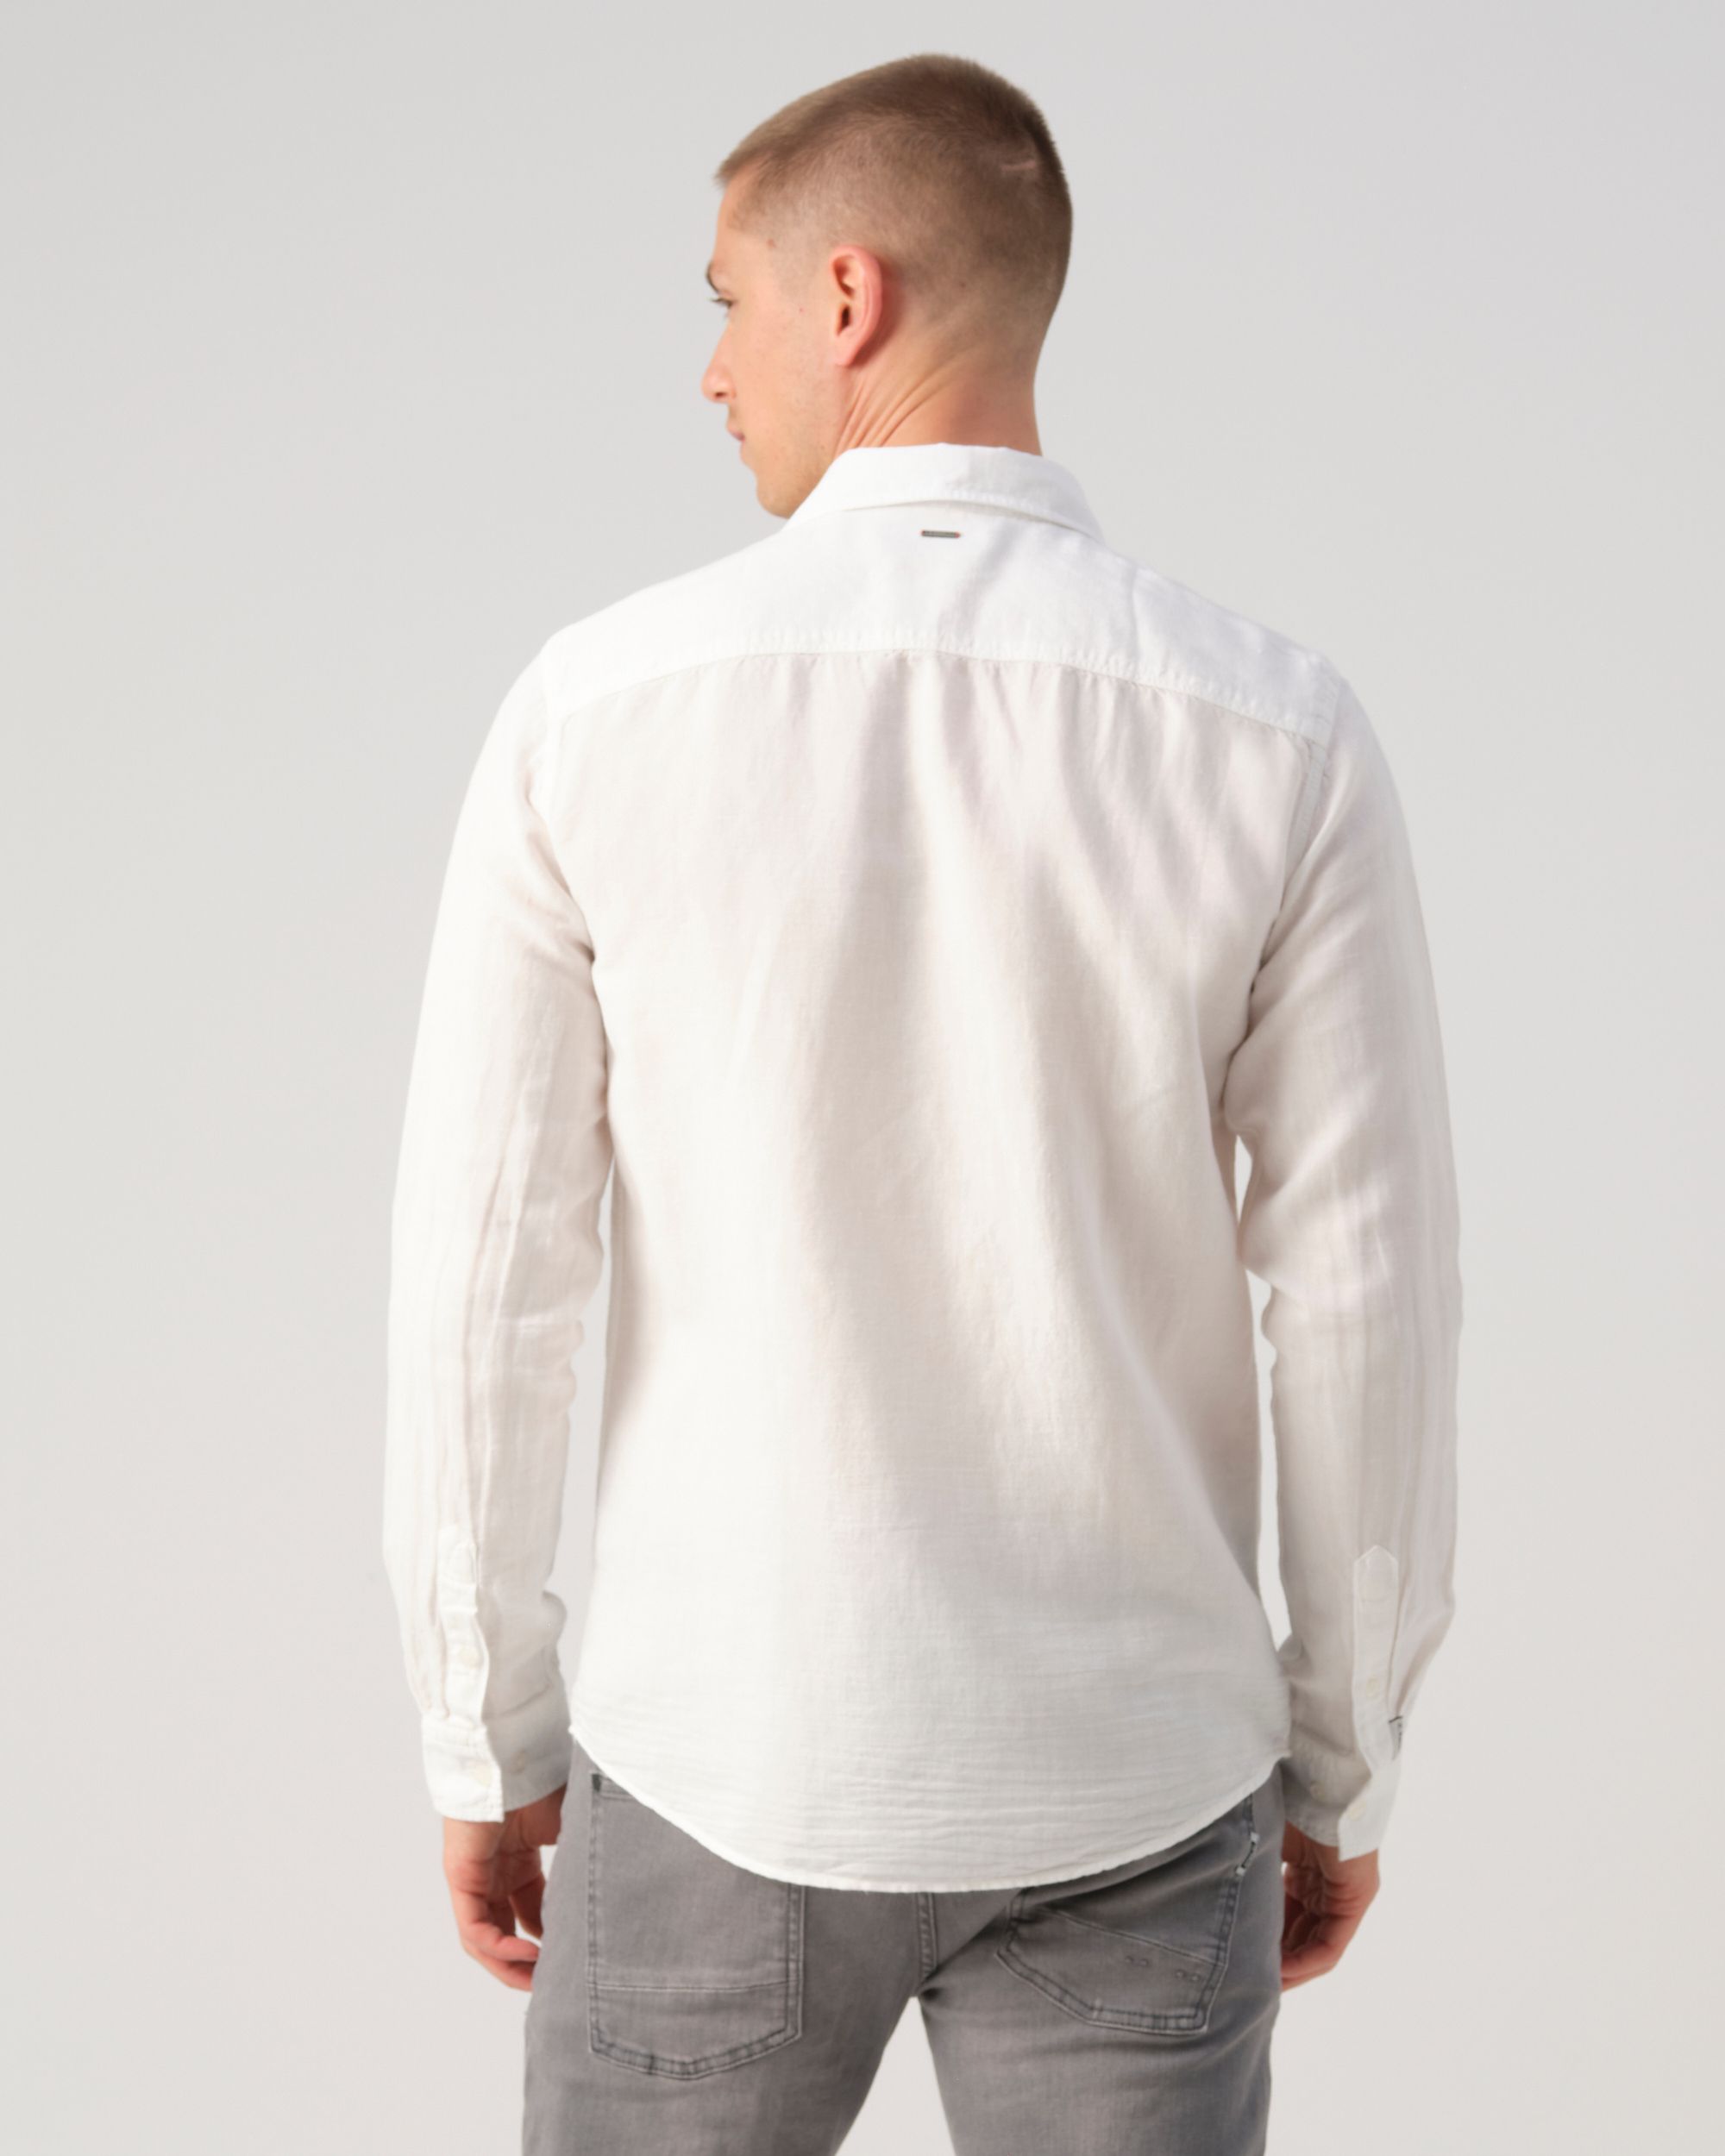 J.C. RAGS Jayden Casual Overhemd LM WHITE 081589-001-L